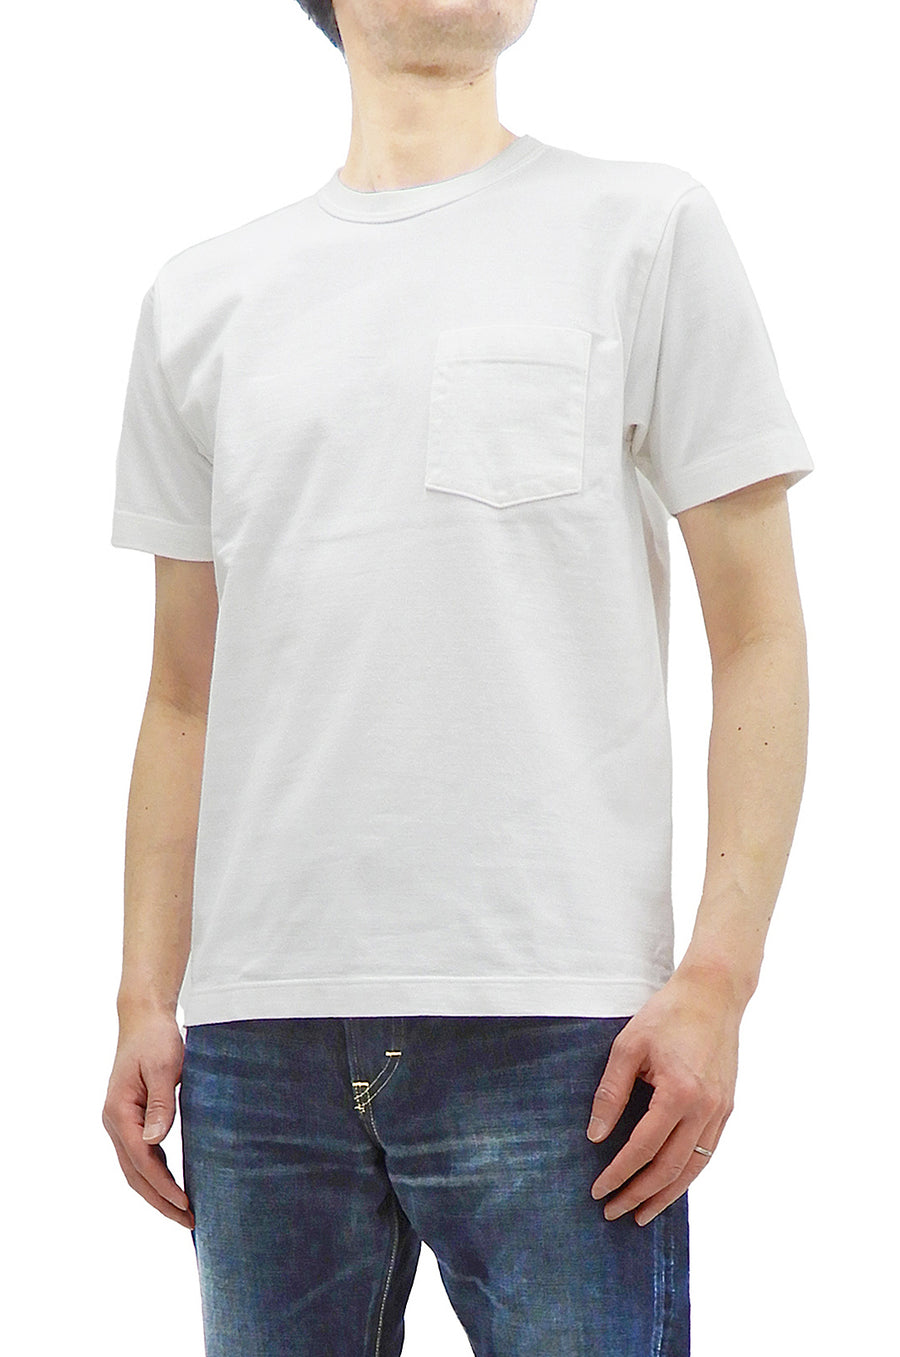 Whitesvill T-Shirt Men's Plain Pocket T Shirt Heavyweight Short